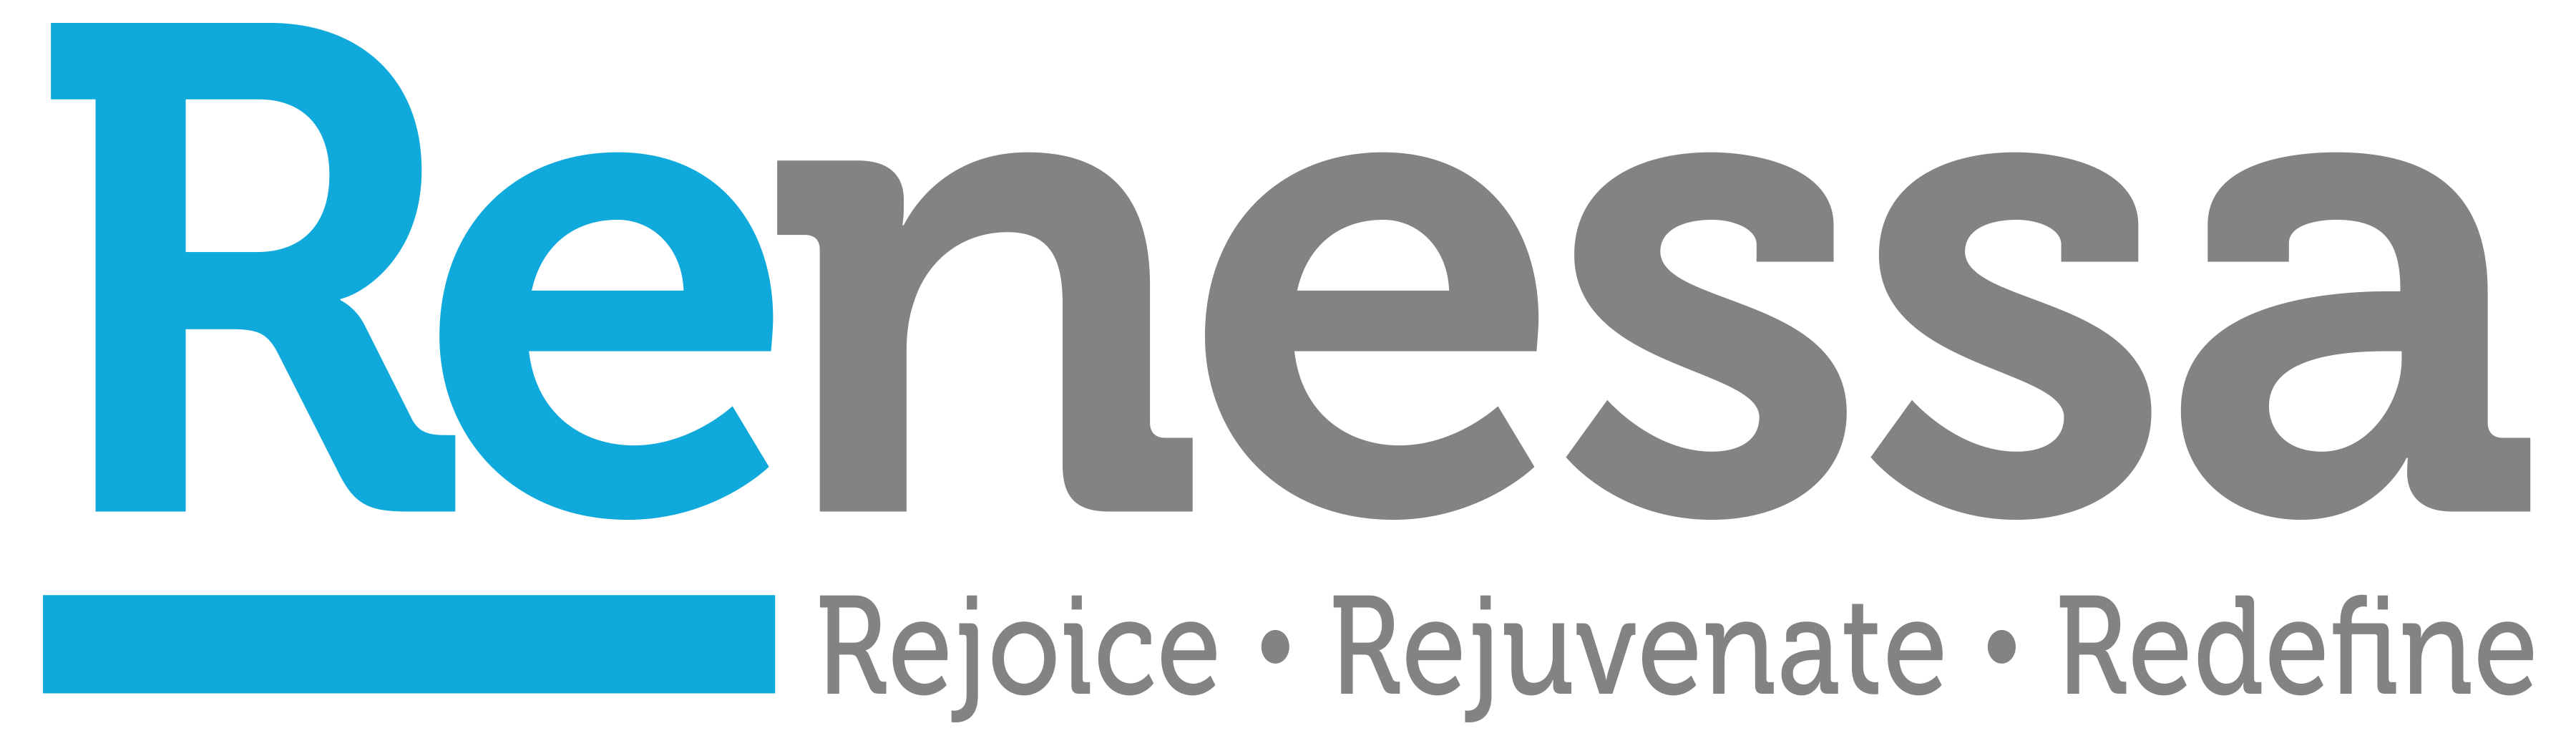 Retirement, Forrest Group, Renessa, Logo